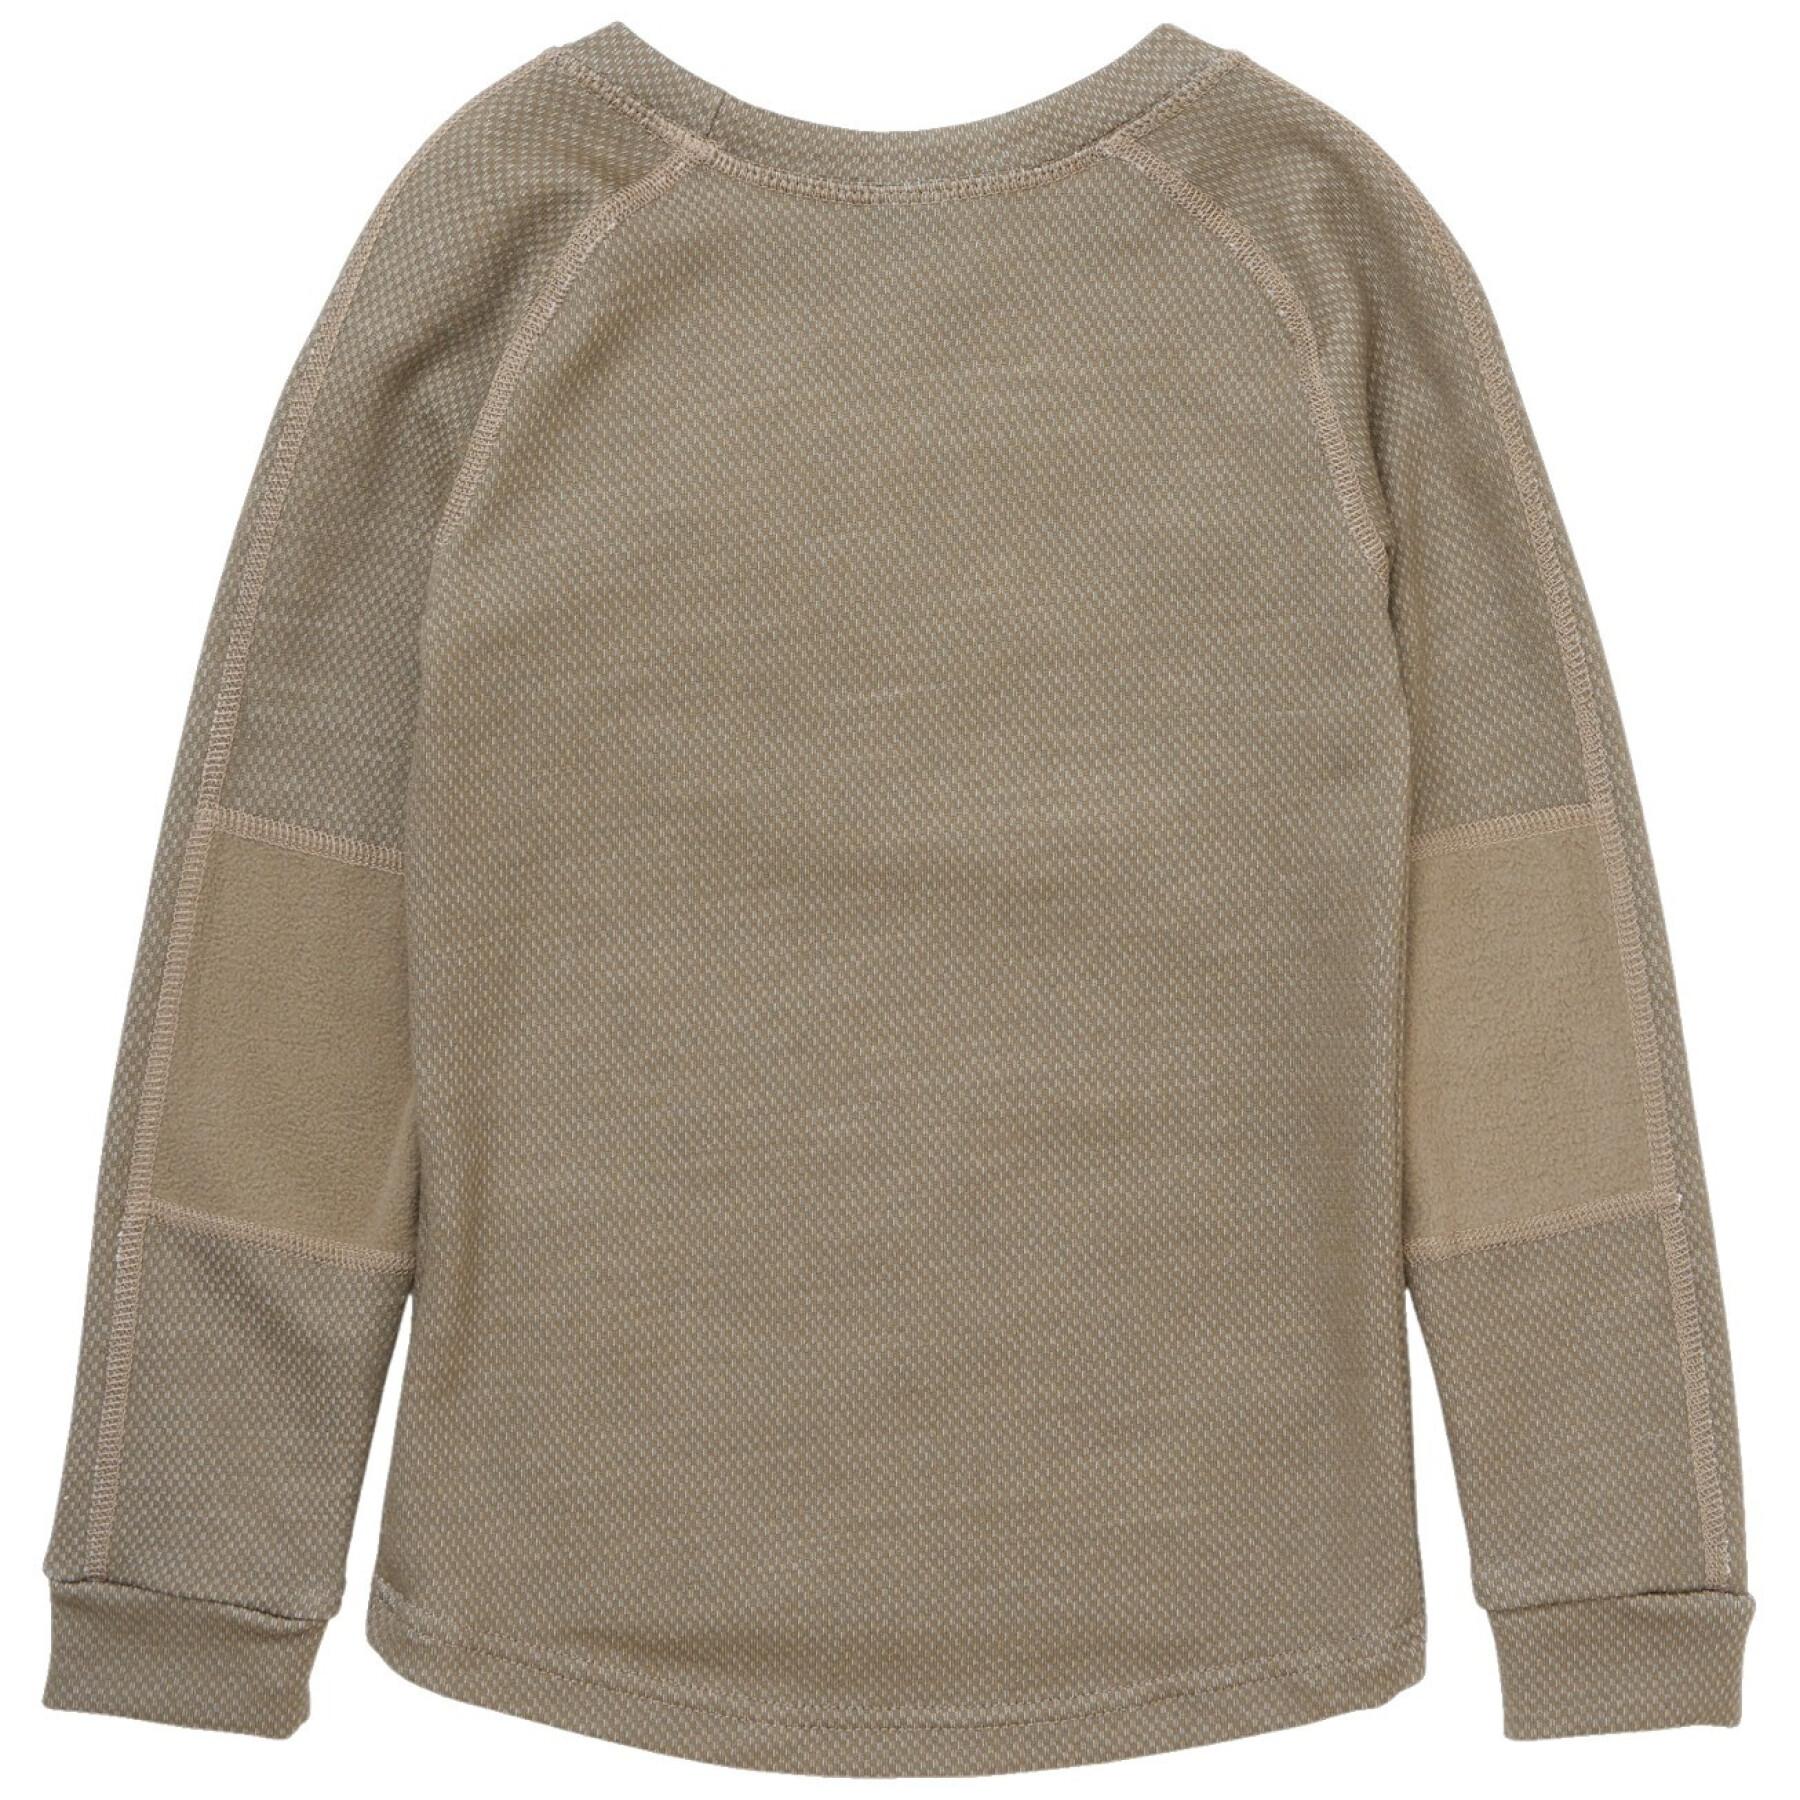 Conjunto para niño de camiseta + legging en lana merina Helly Hansen Lifa